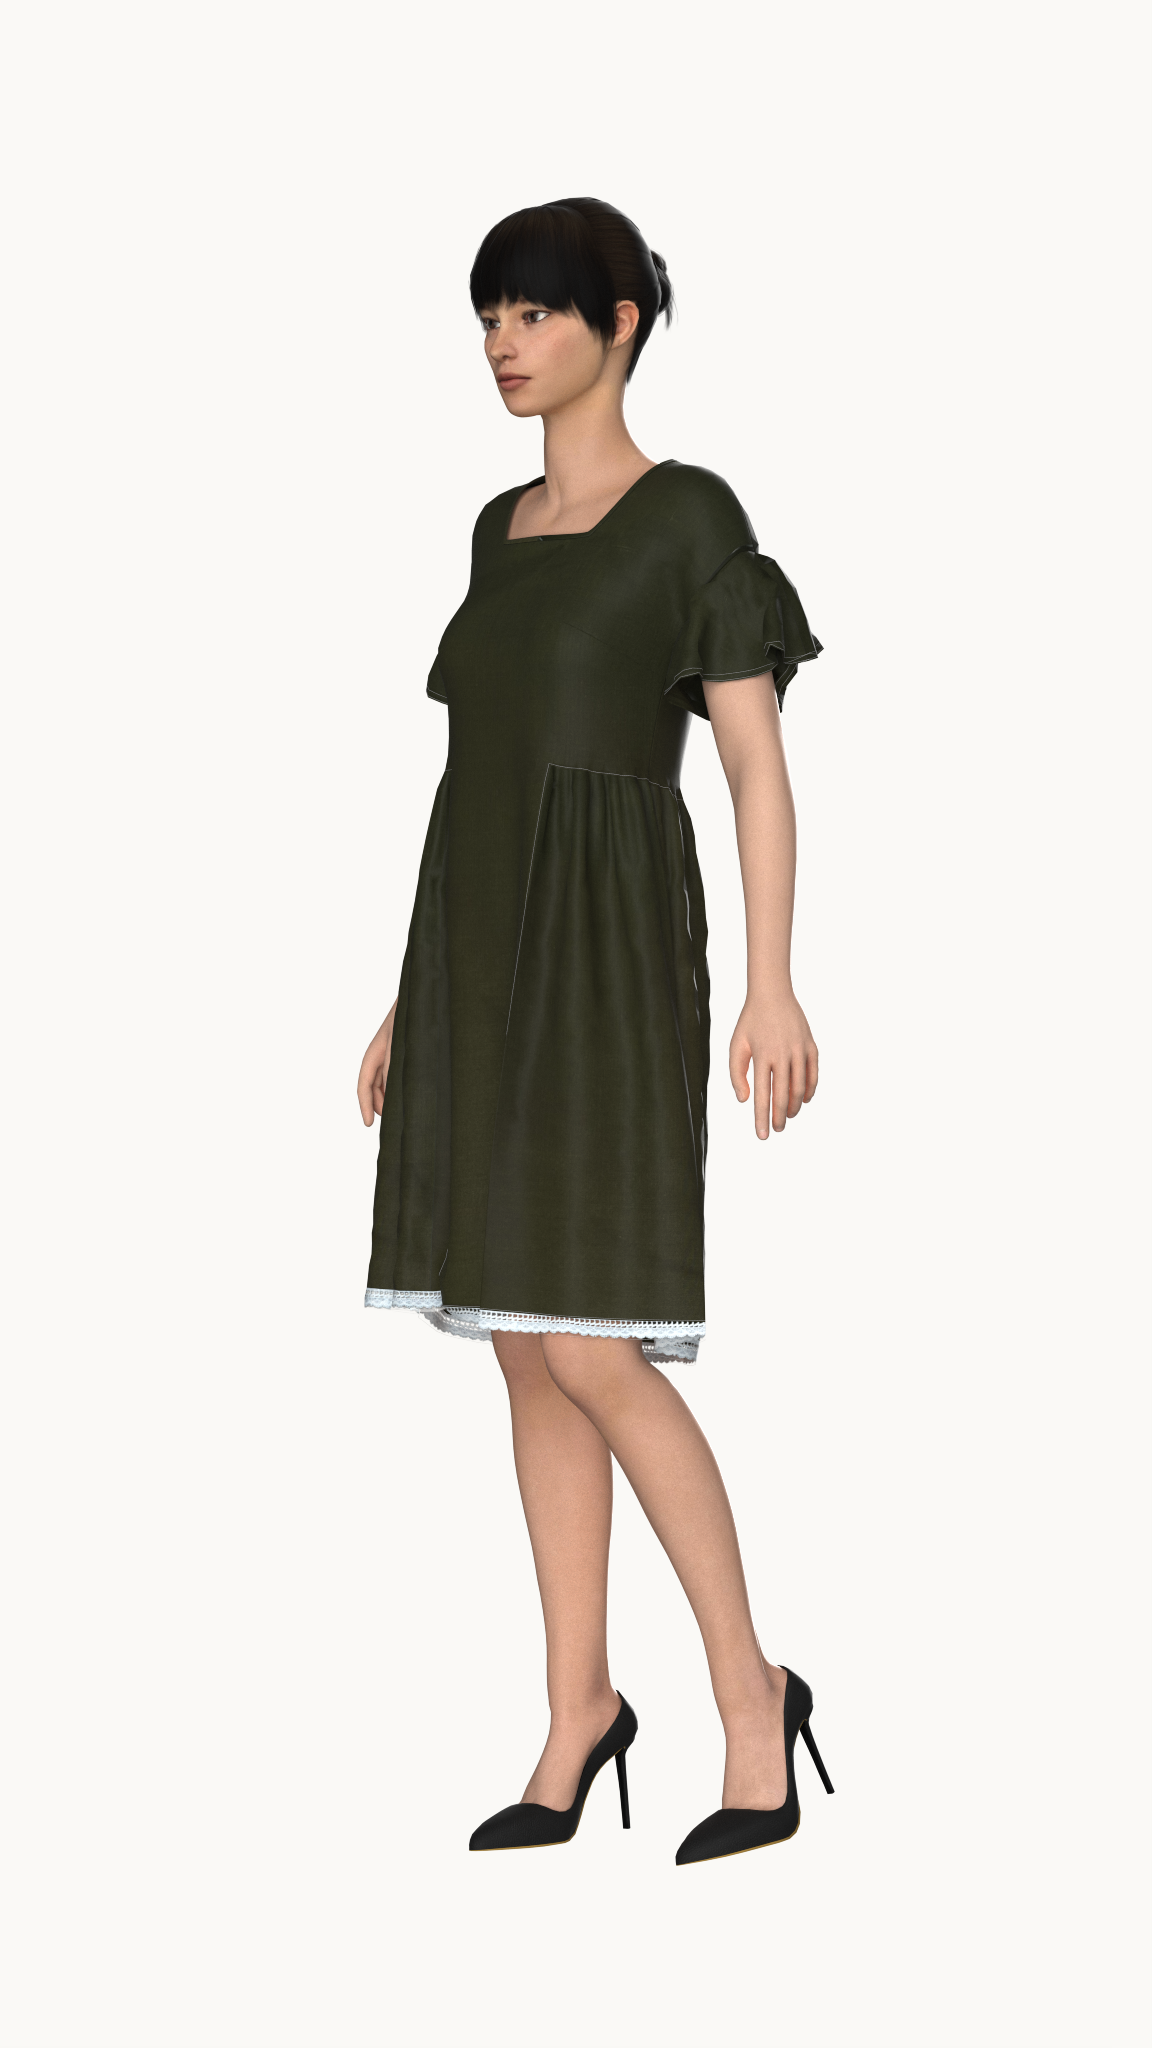 Gather dress at waist with lace hem (Plus size)